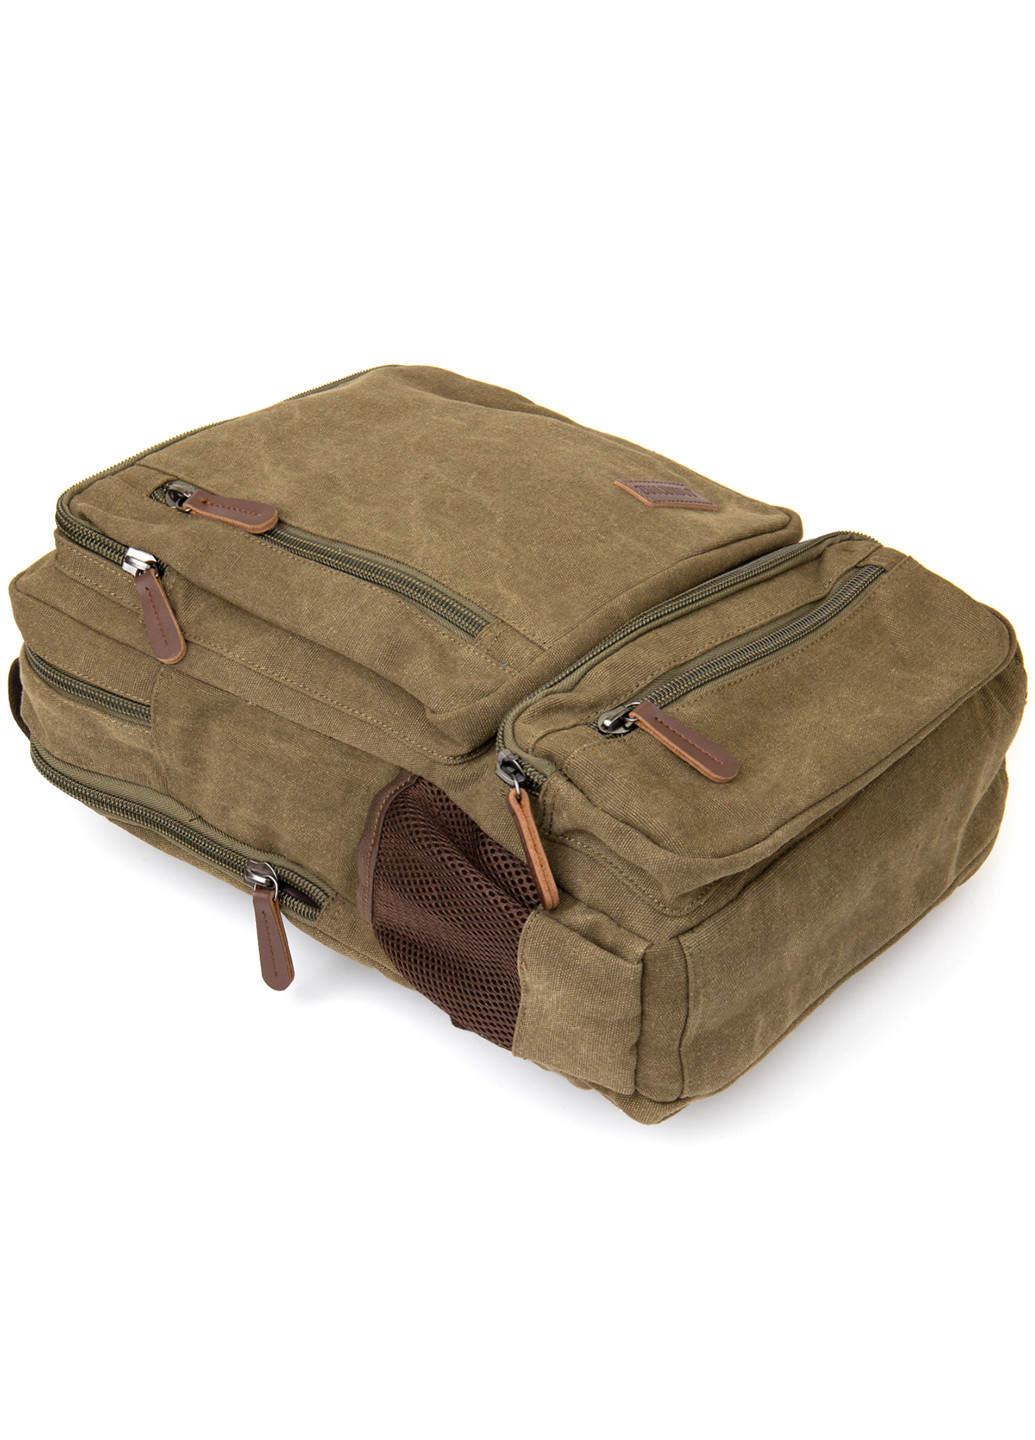 Текстильный рюкзак 31х42х16 см Vintage (242189285)